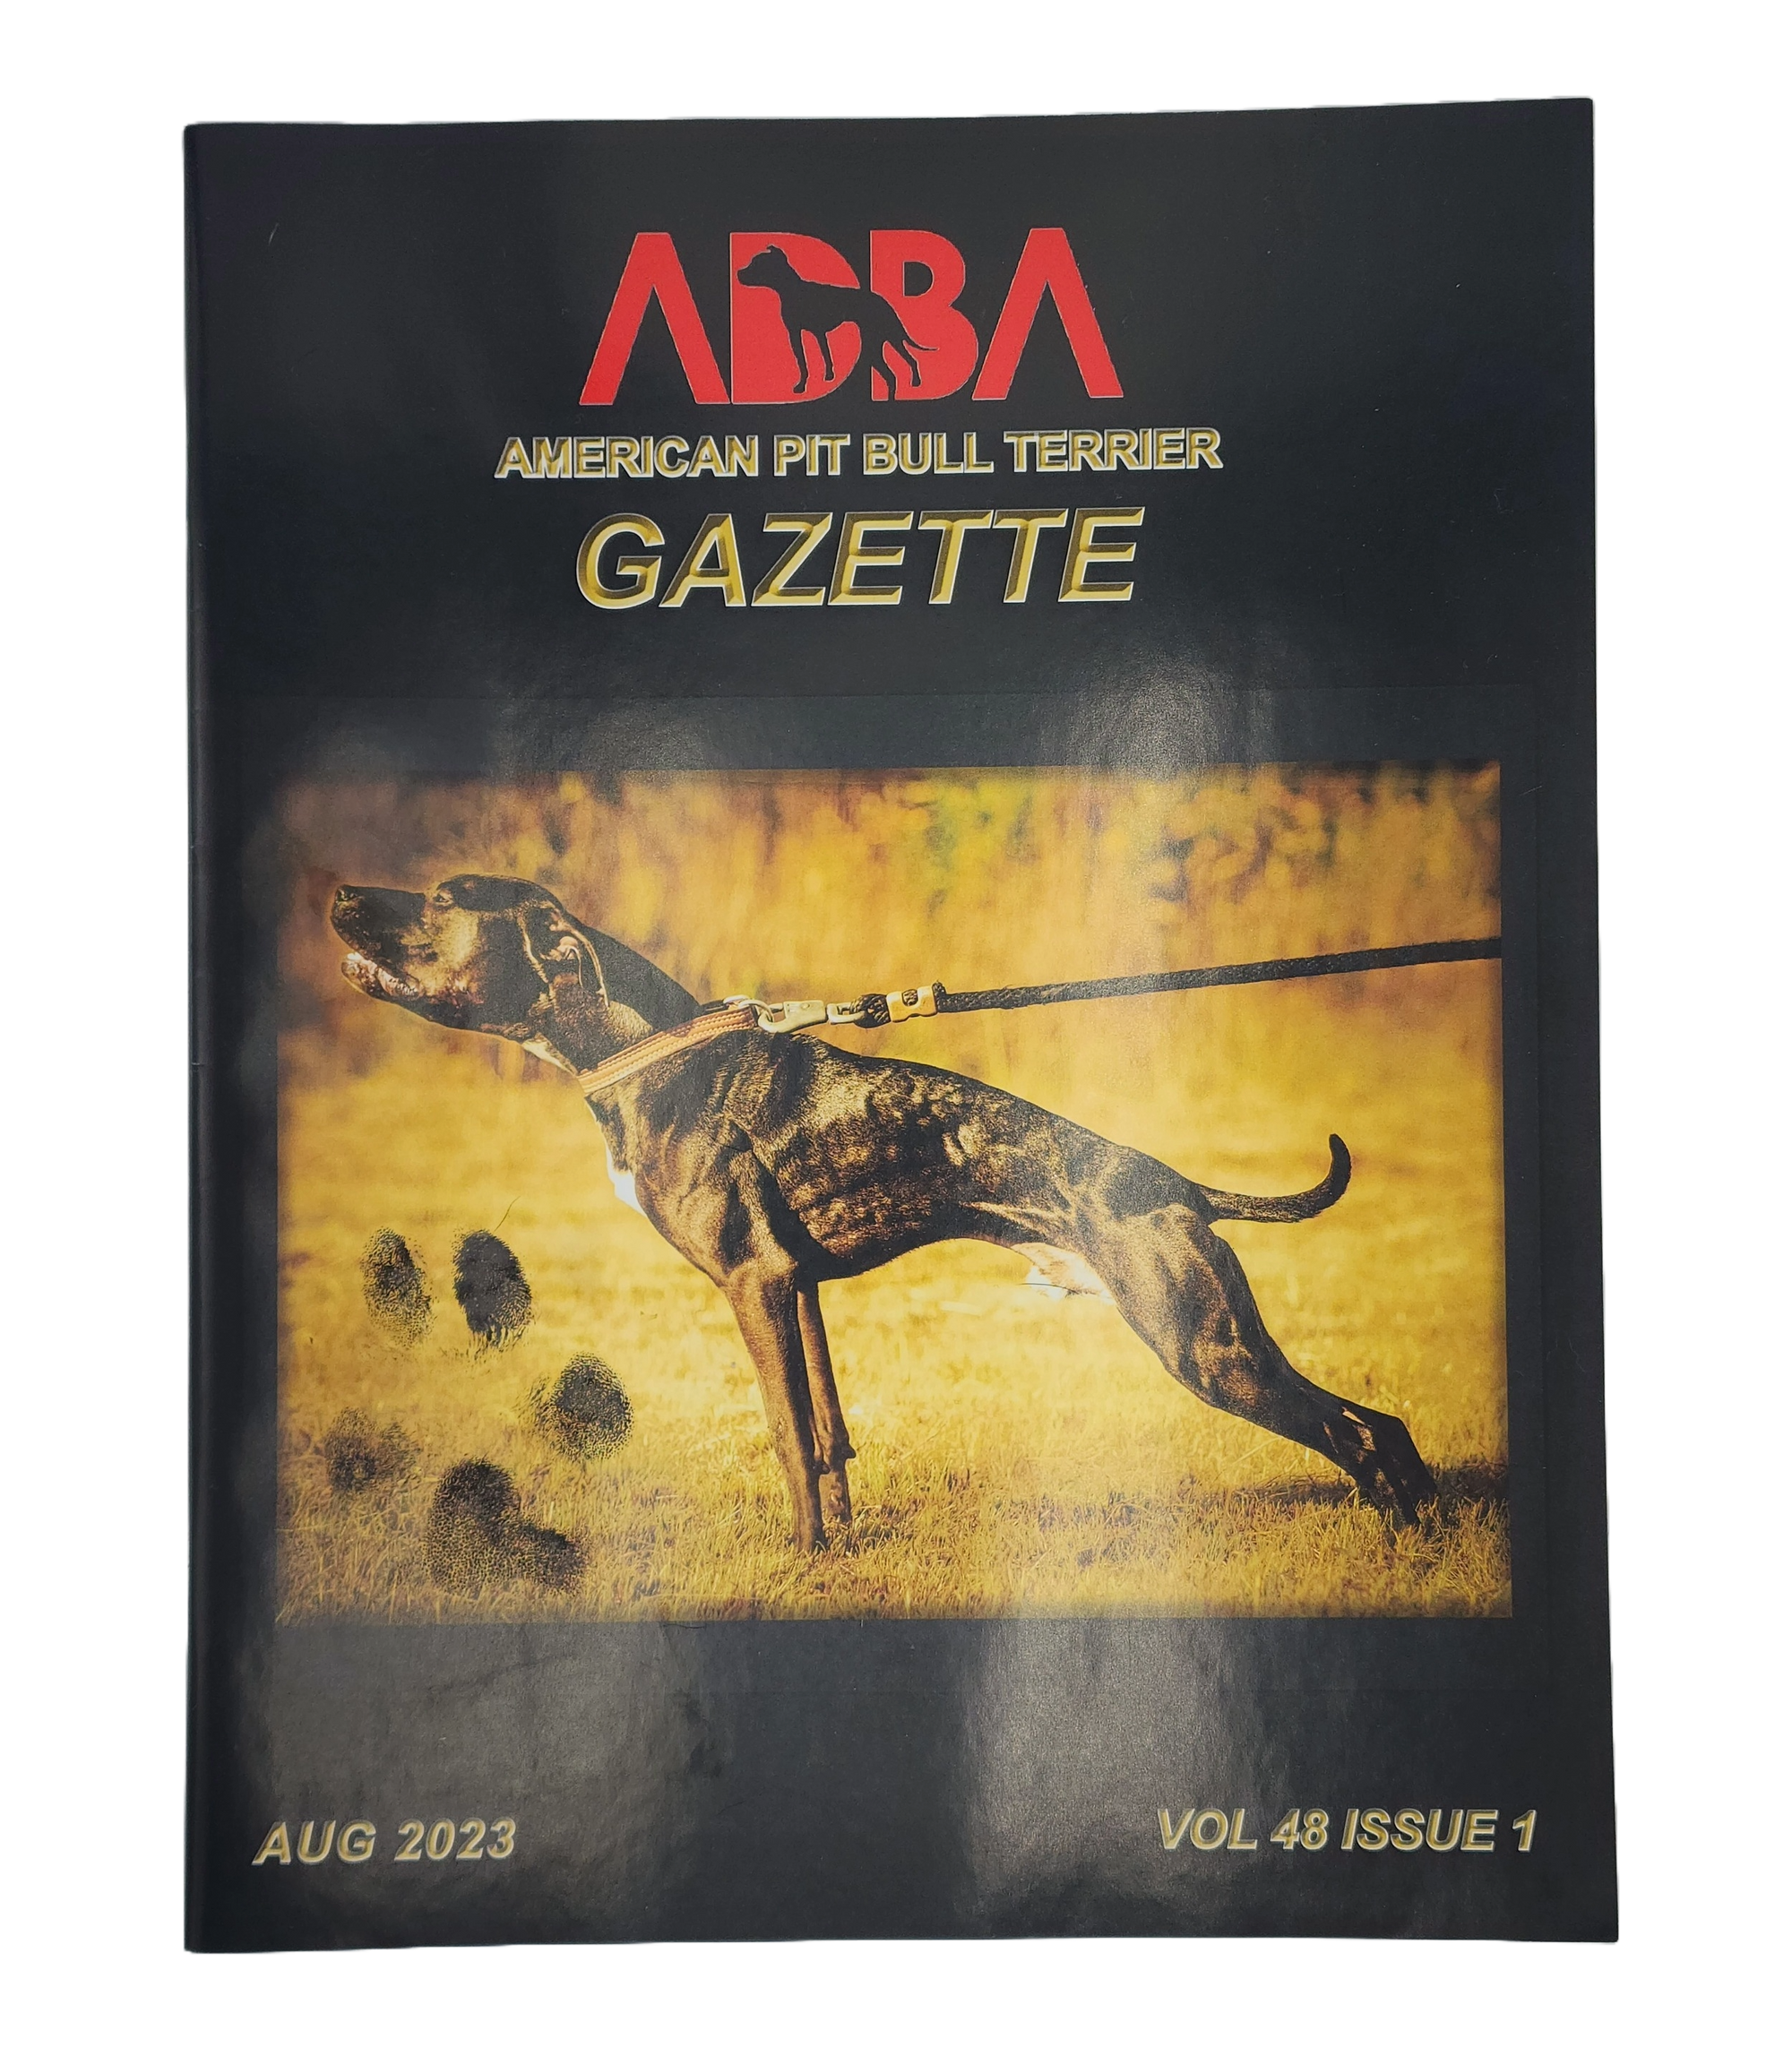 ADBA American Pit Bull Terrier Gazette Magazine